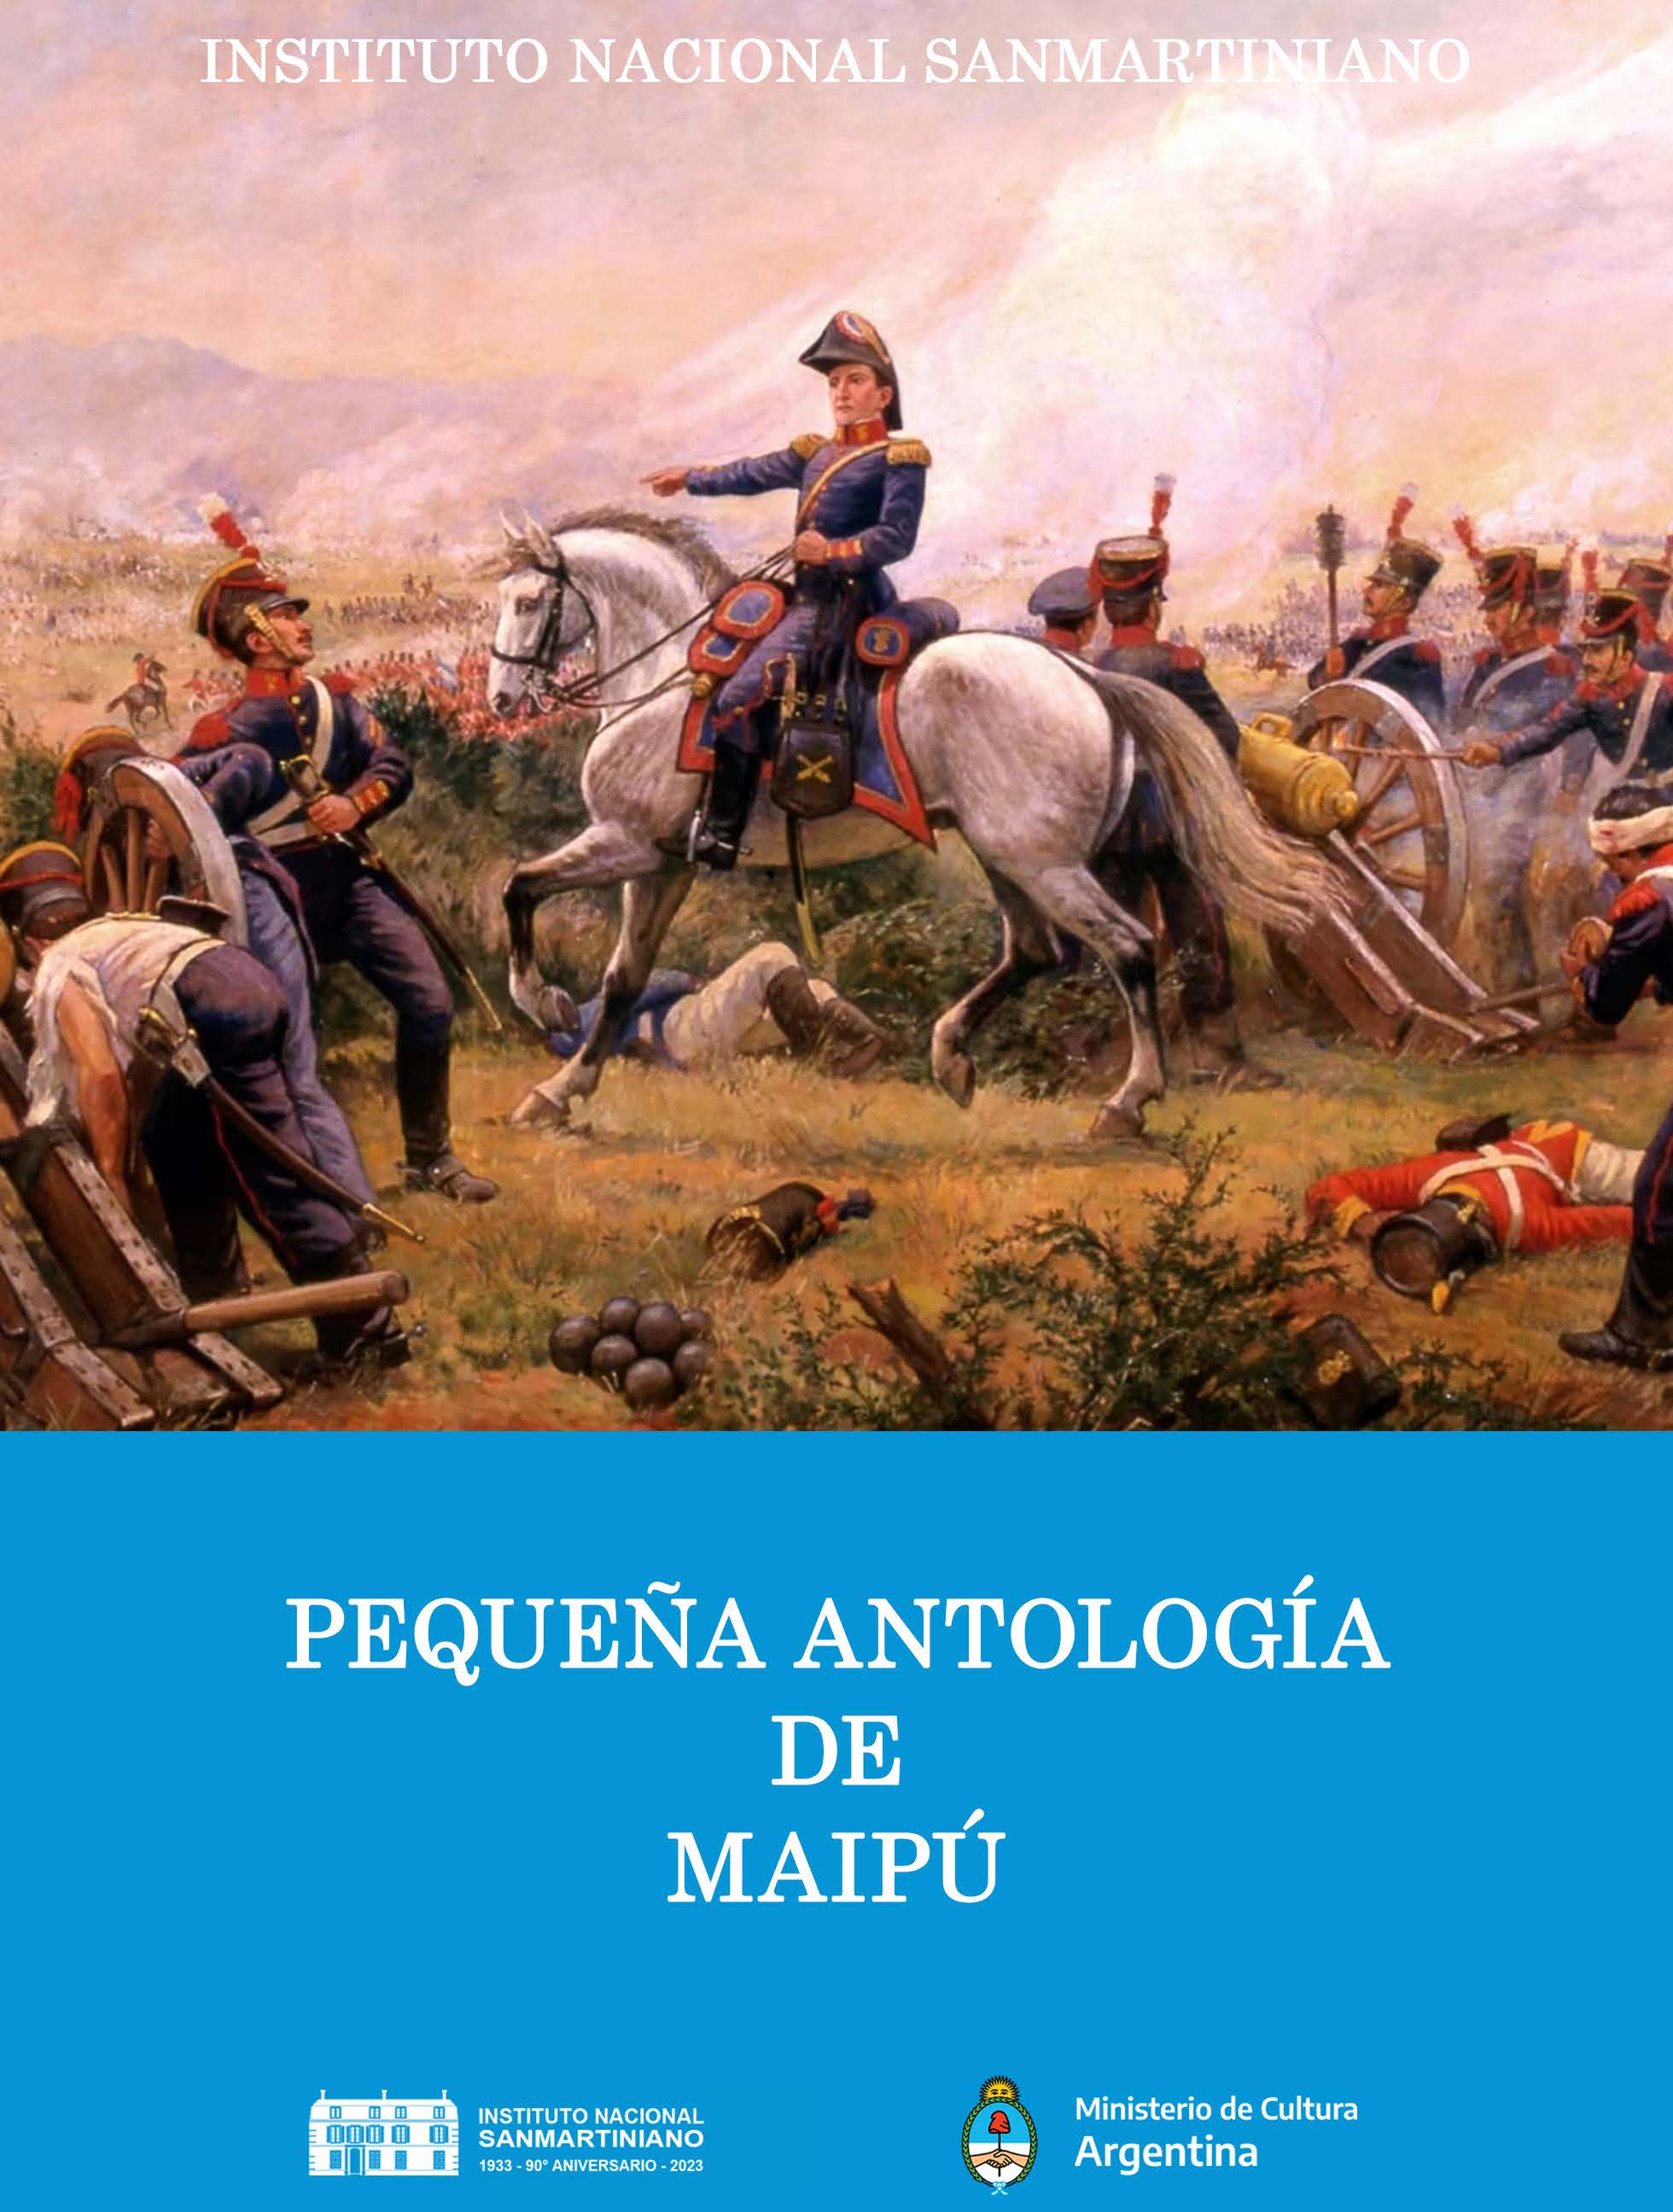 AA.VV. "Pequeña antología de Maipú". Instituto Nacional Sanmartiniano, Buenos Aires, 2023.